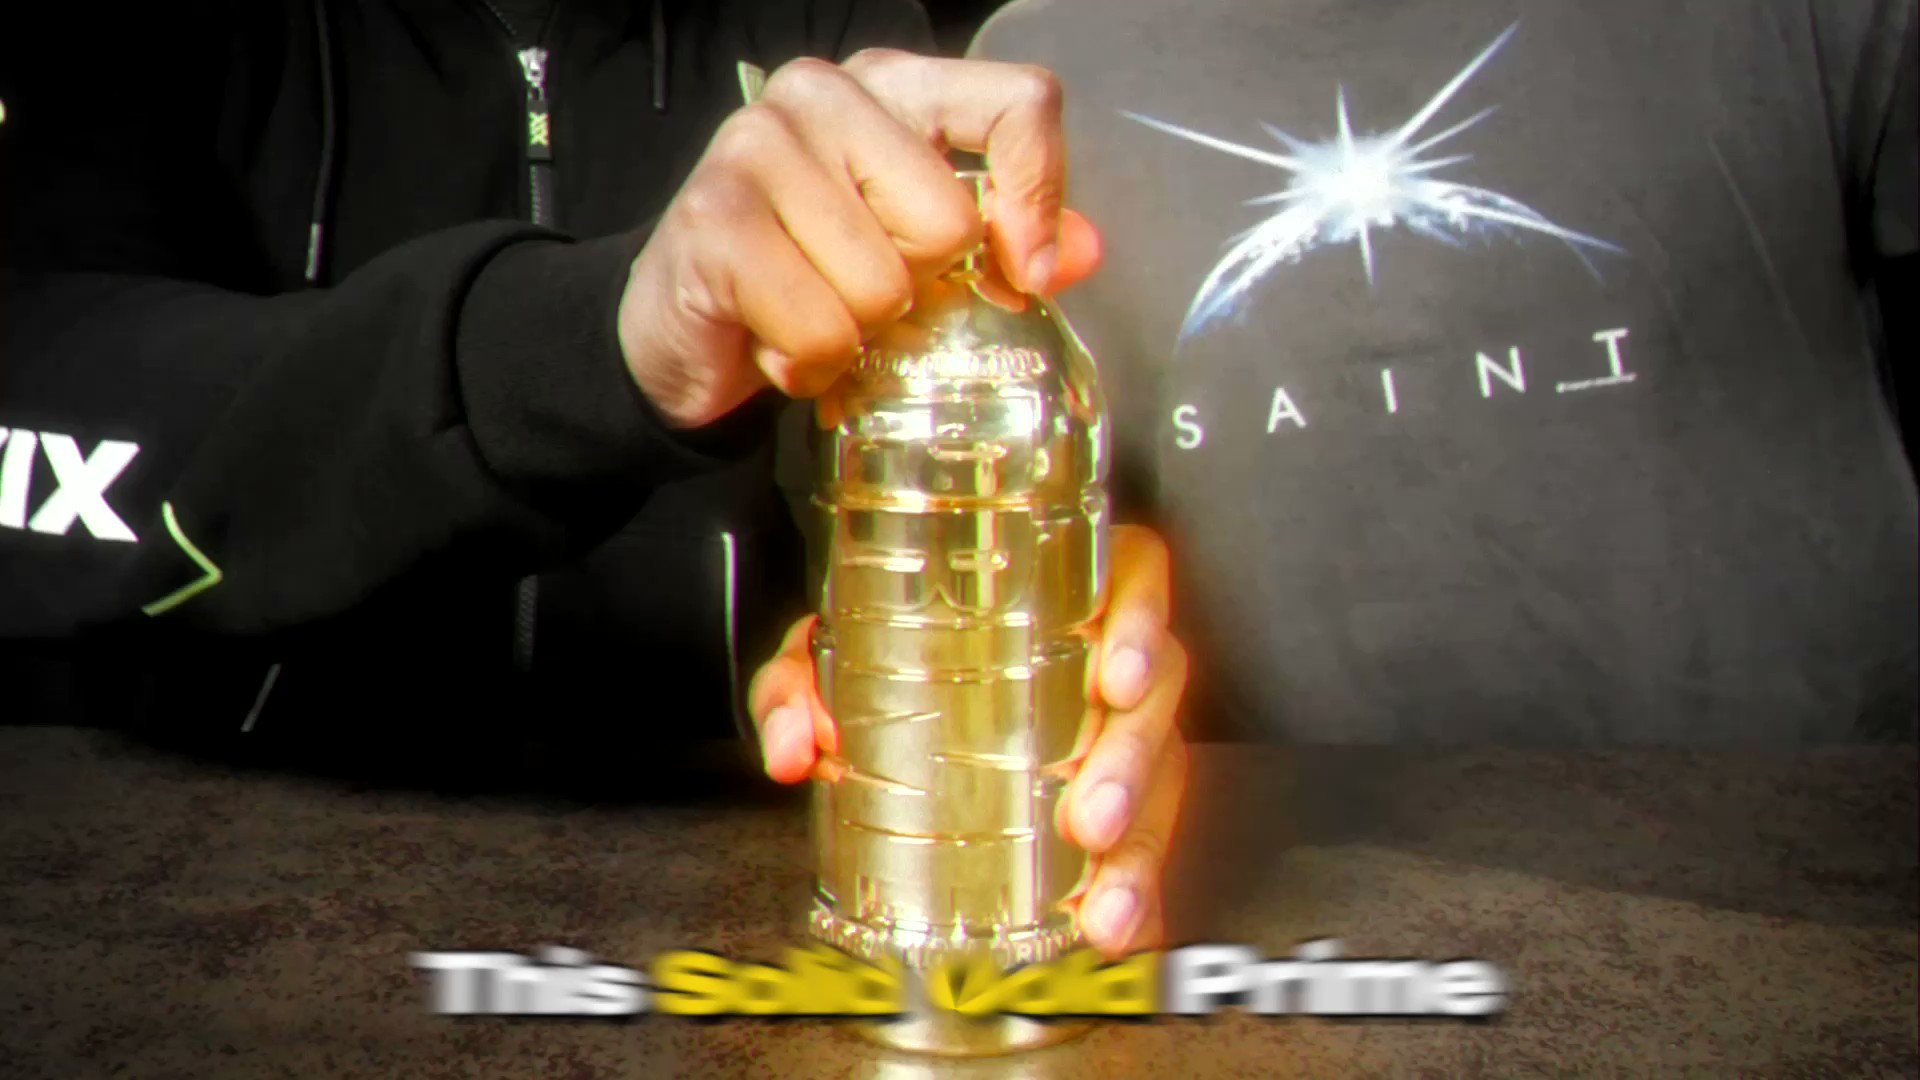 Golden Prime